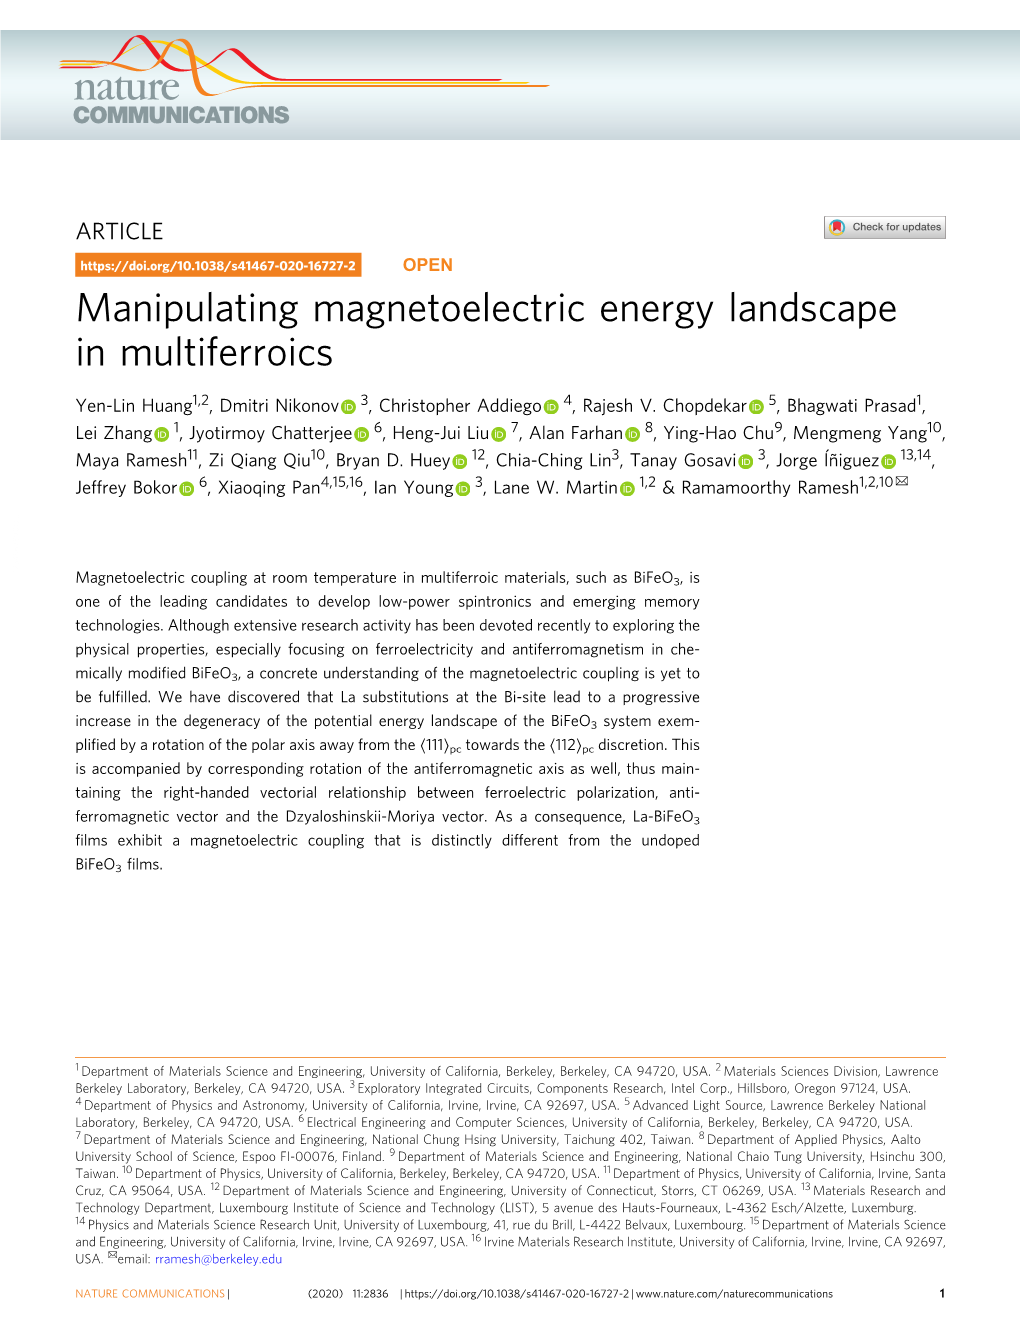 Manipulating Magnetoelectric Energy Landscape in Multiferroics